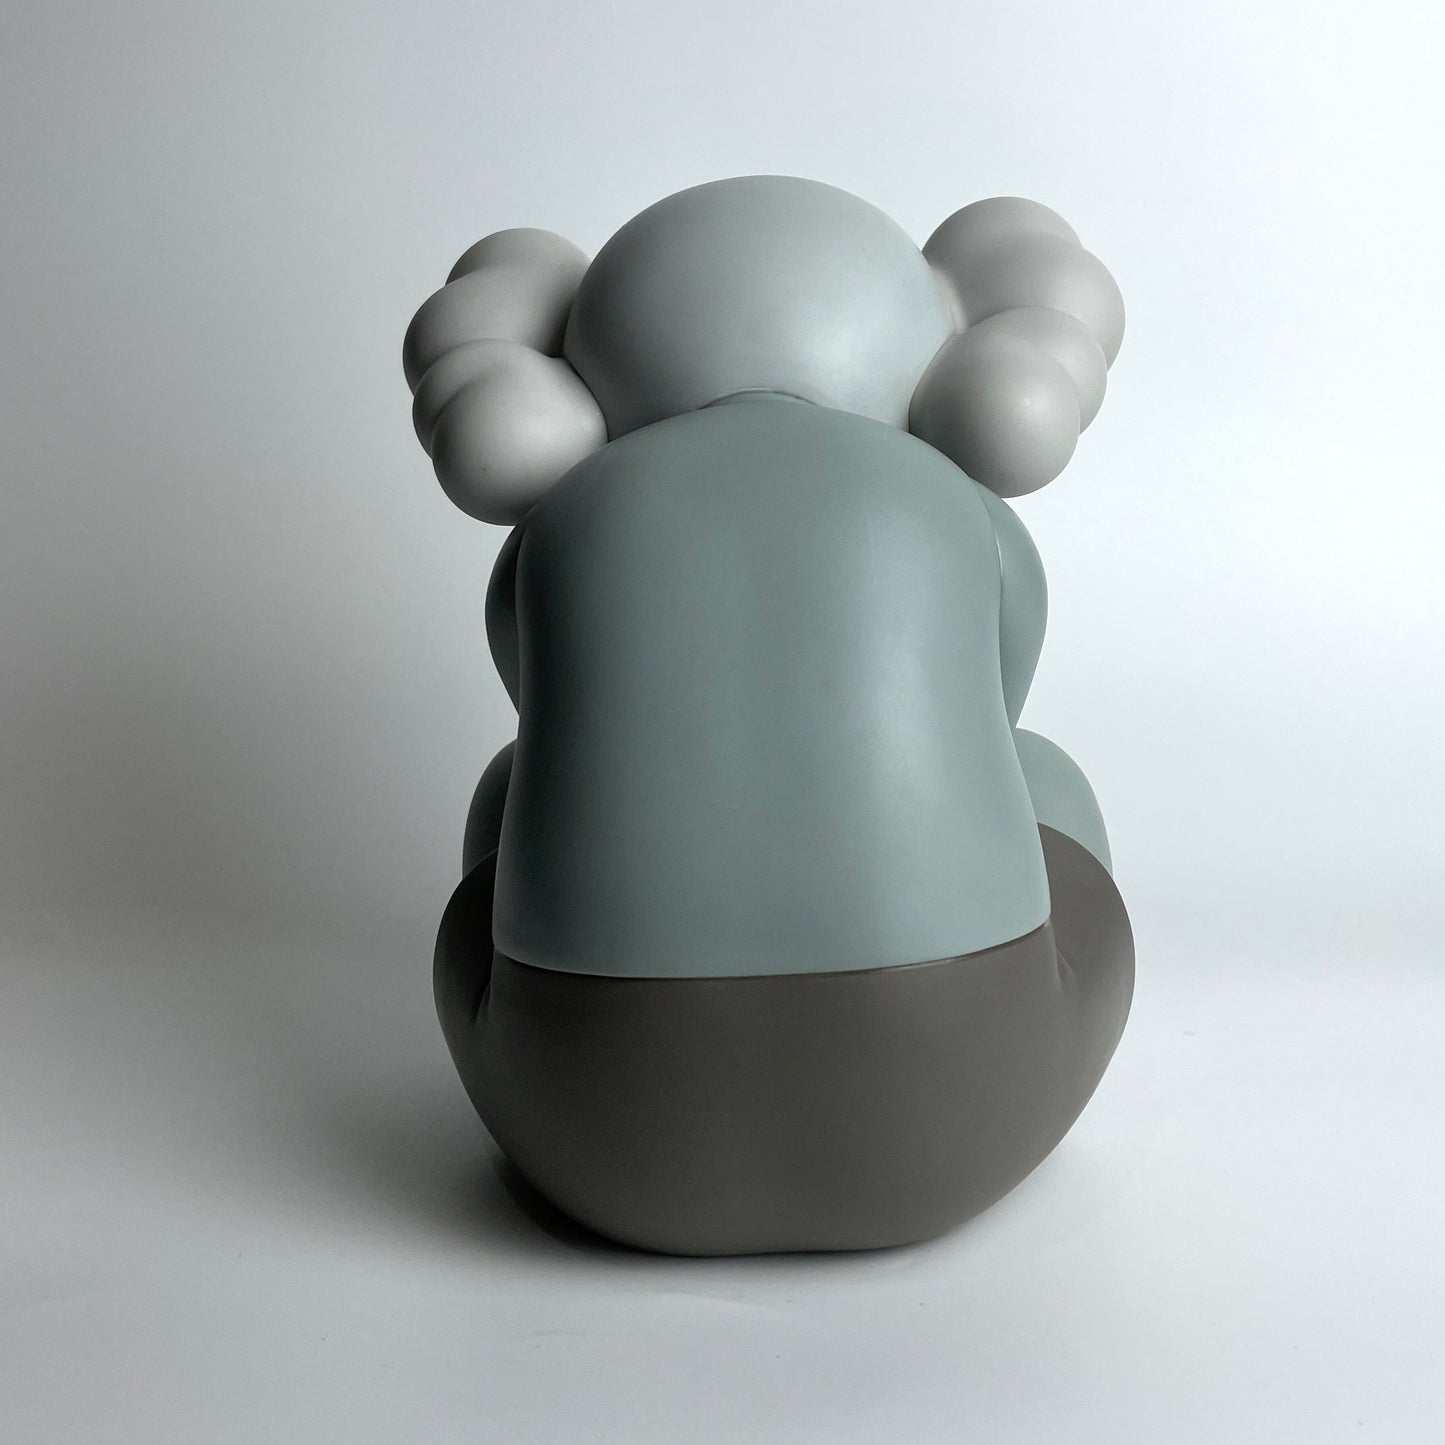 Hobby - Boxless Bulk Trendy KAW Separate Companion Edition Action Figure 25cm